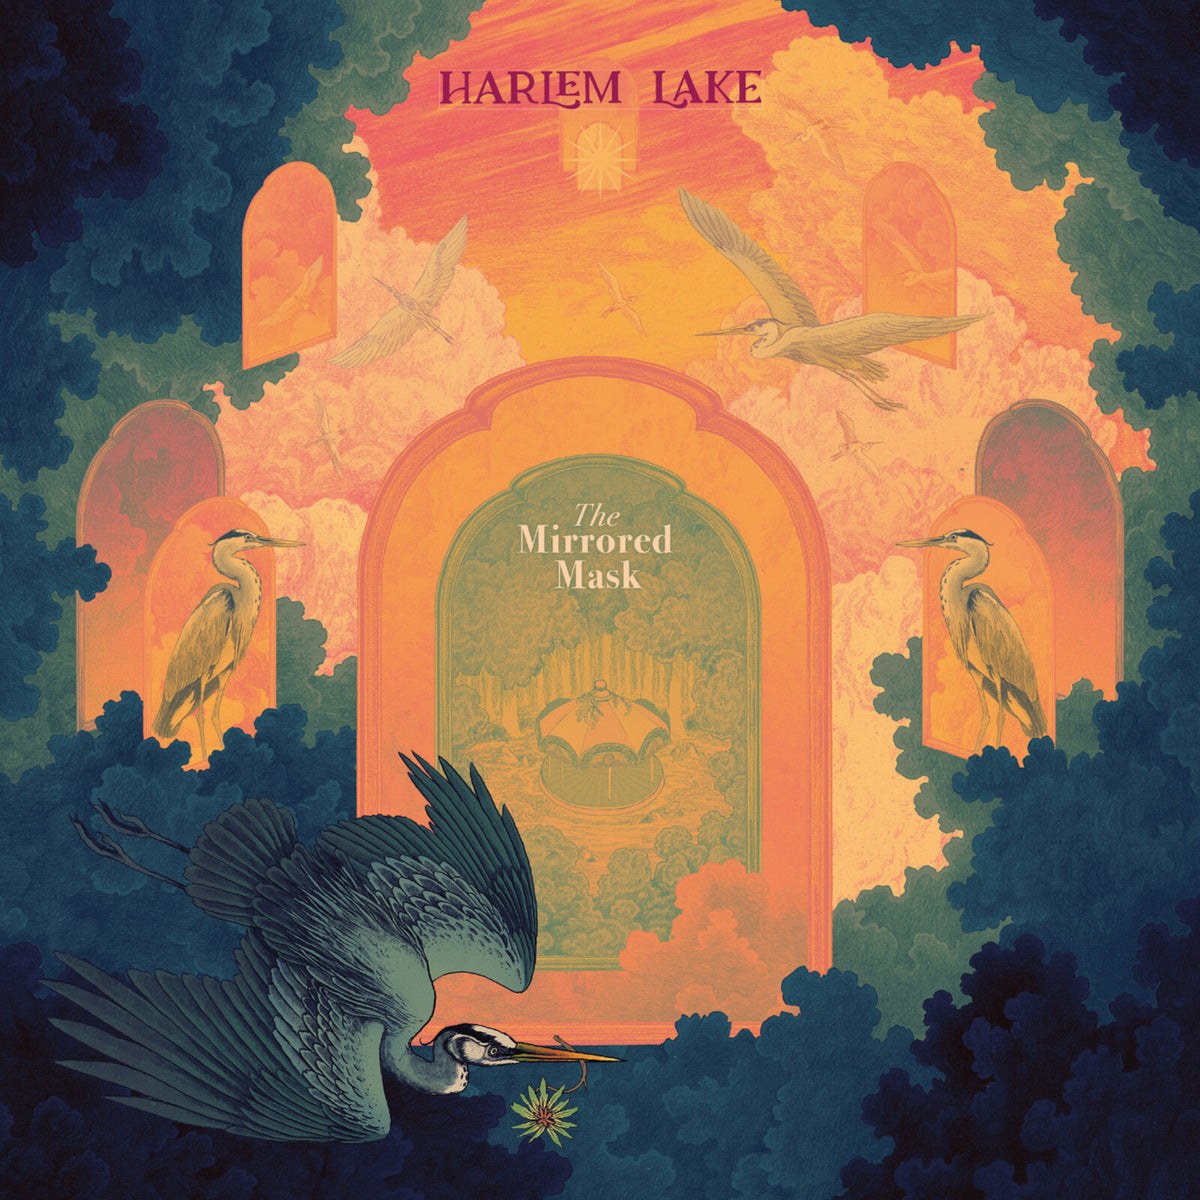 Harlem Lake - The Mirrored Mask - JHR252